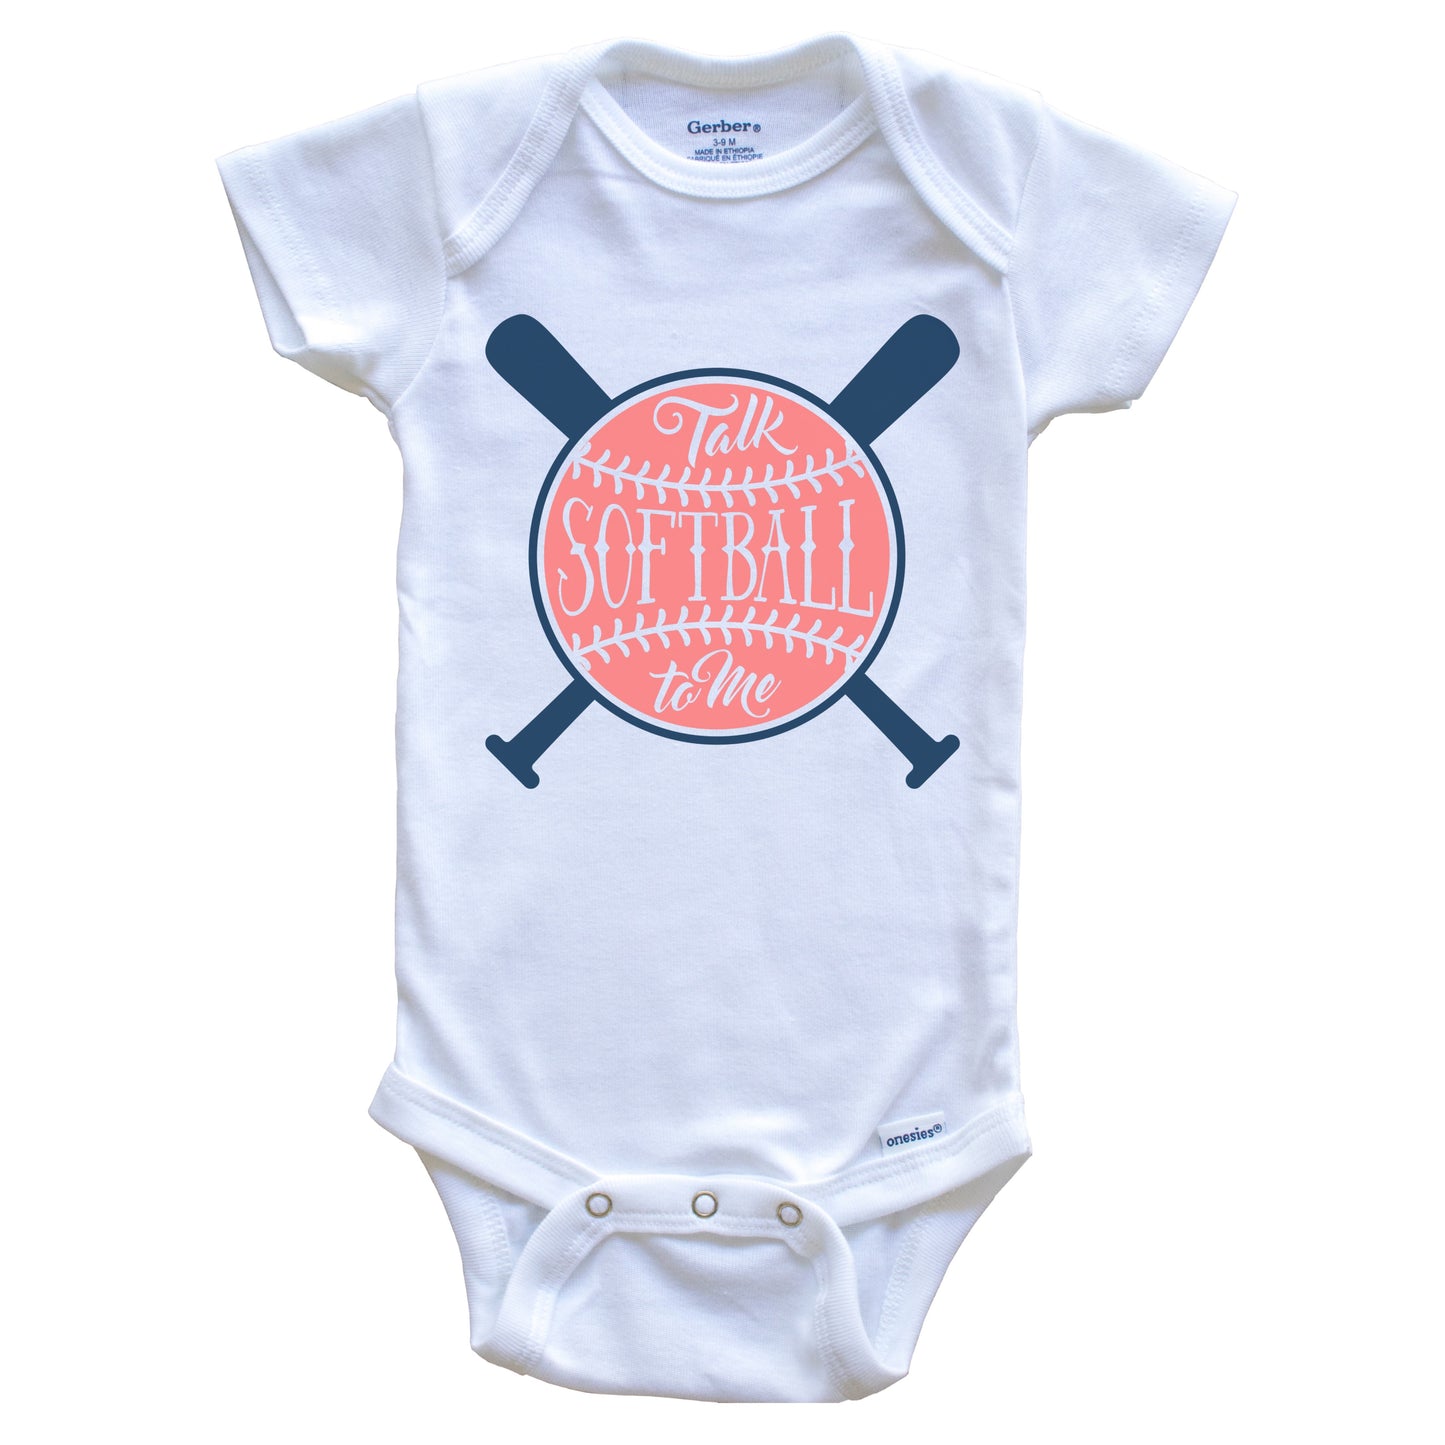 Talk Softball To Me Funny Cute Baby Onesie - Baby Bodysuit